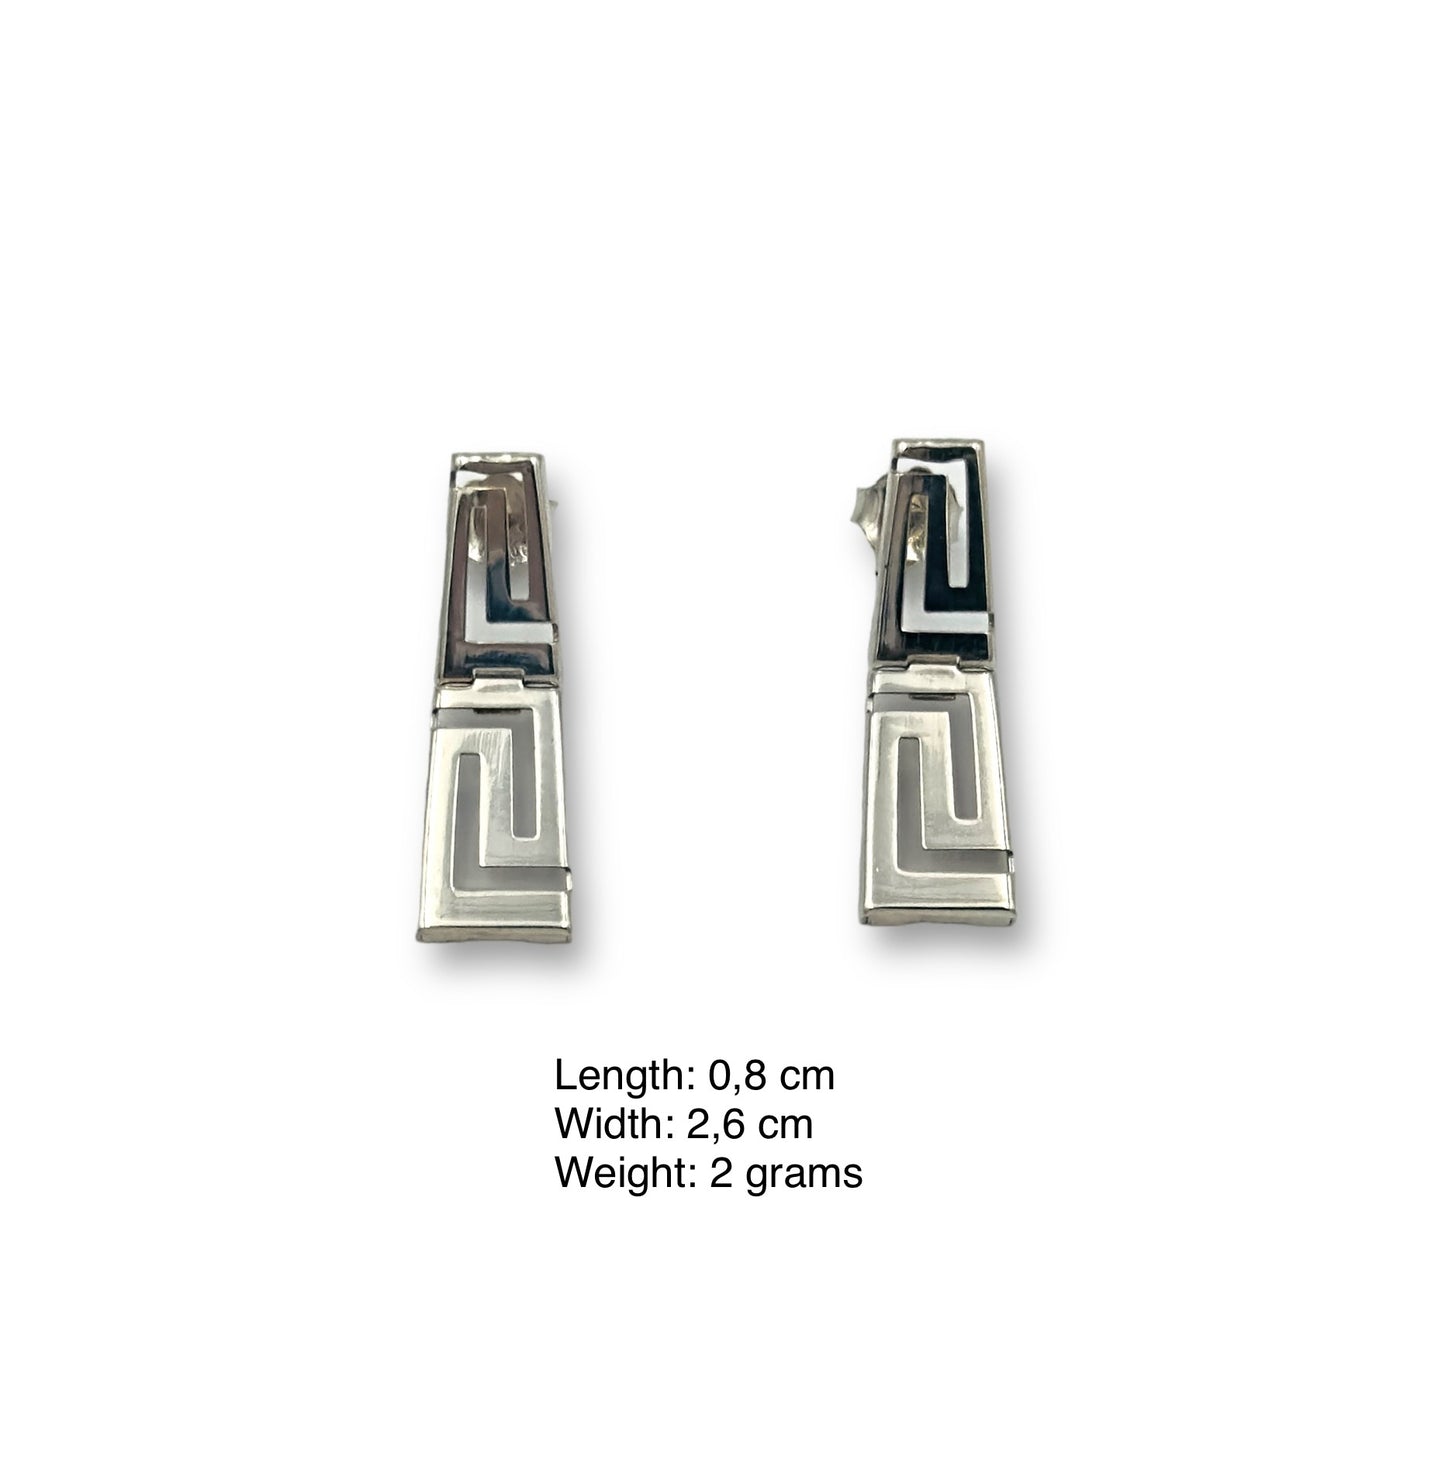 Silver Meander design earrings